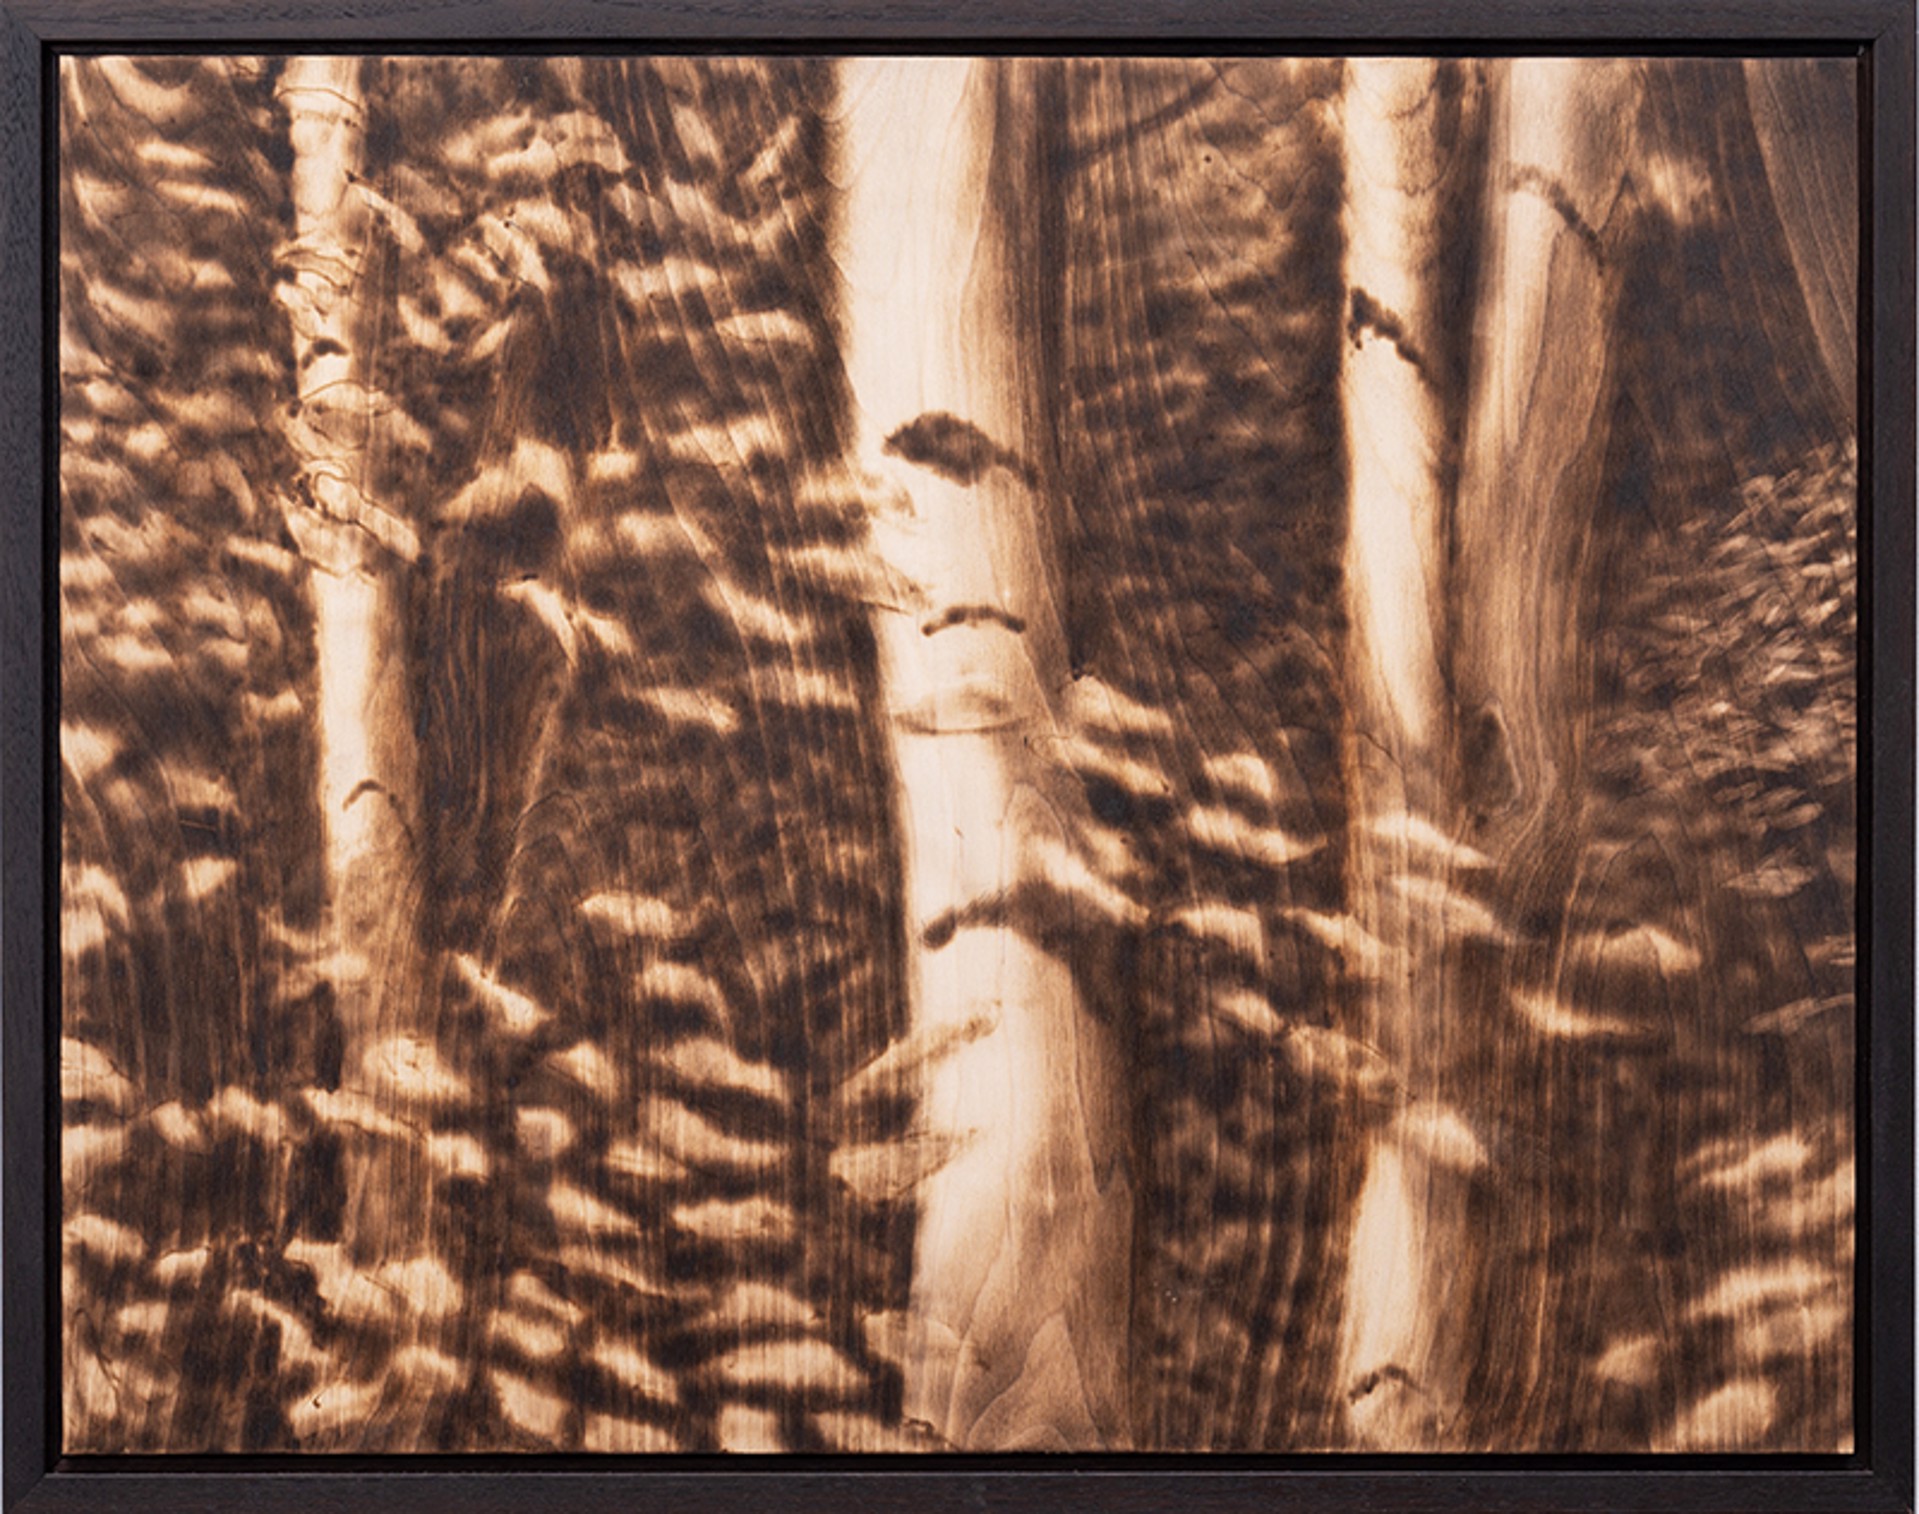 Amongst the Birches #8 by Paul Chojnowski